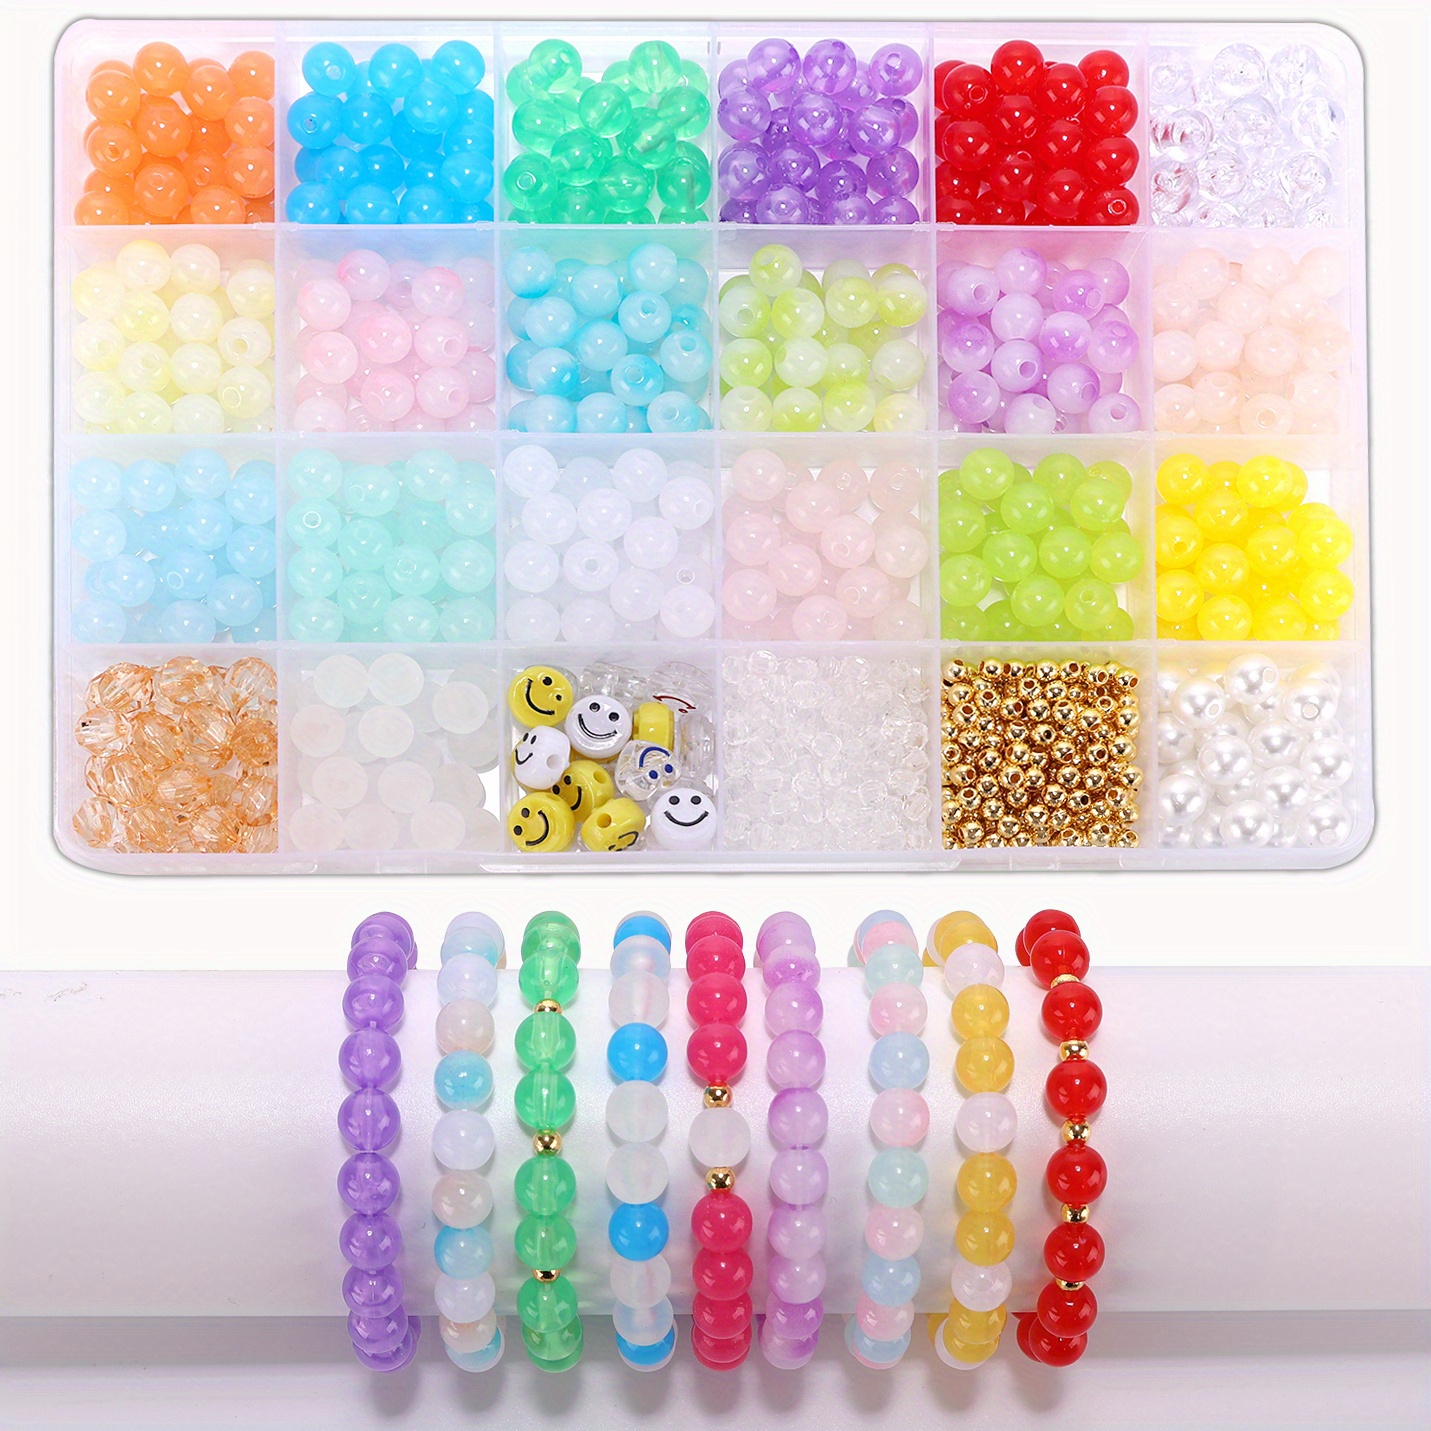 The Joy Stretchy Bracelet Making Kit – Beads, Inc.